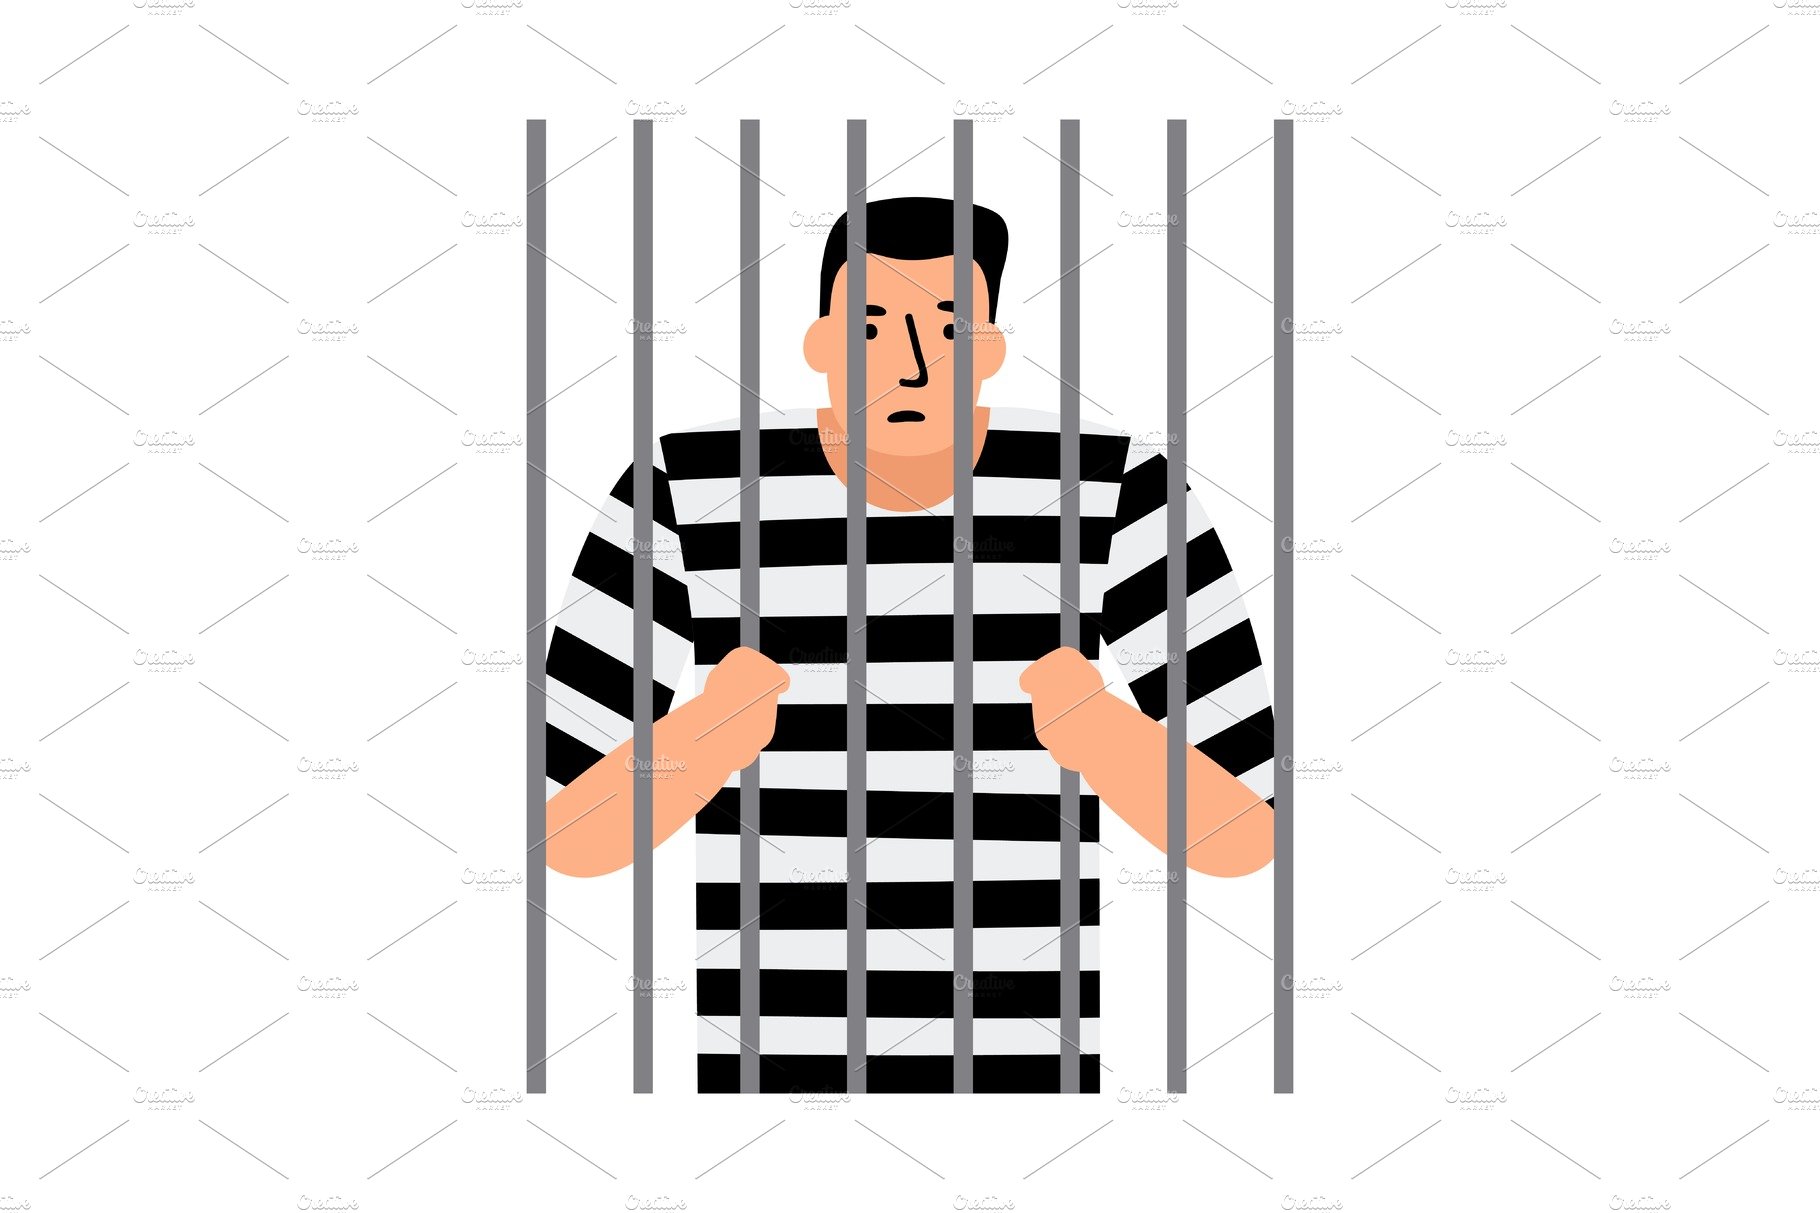 Criminal man in jail cover image.